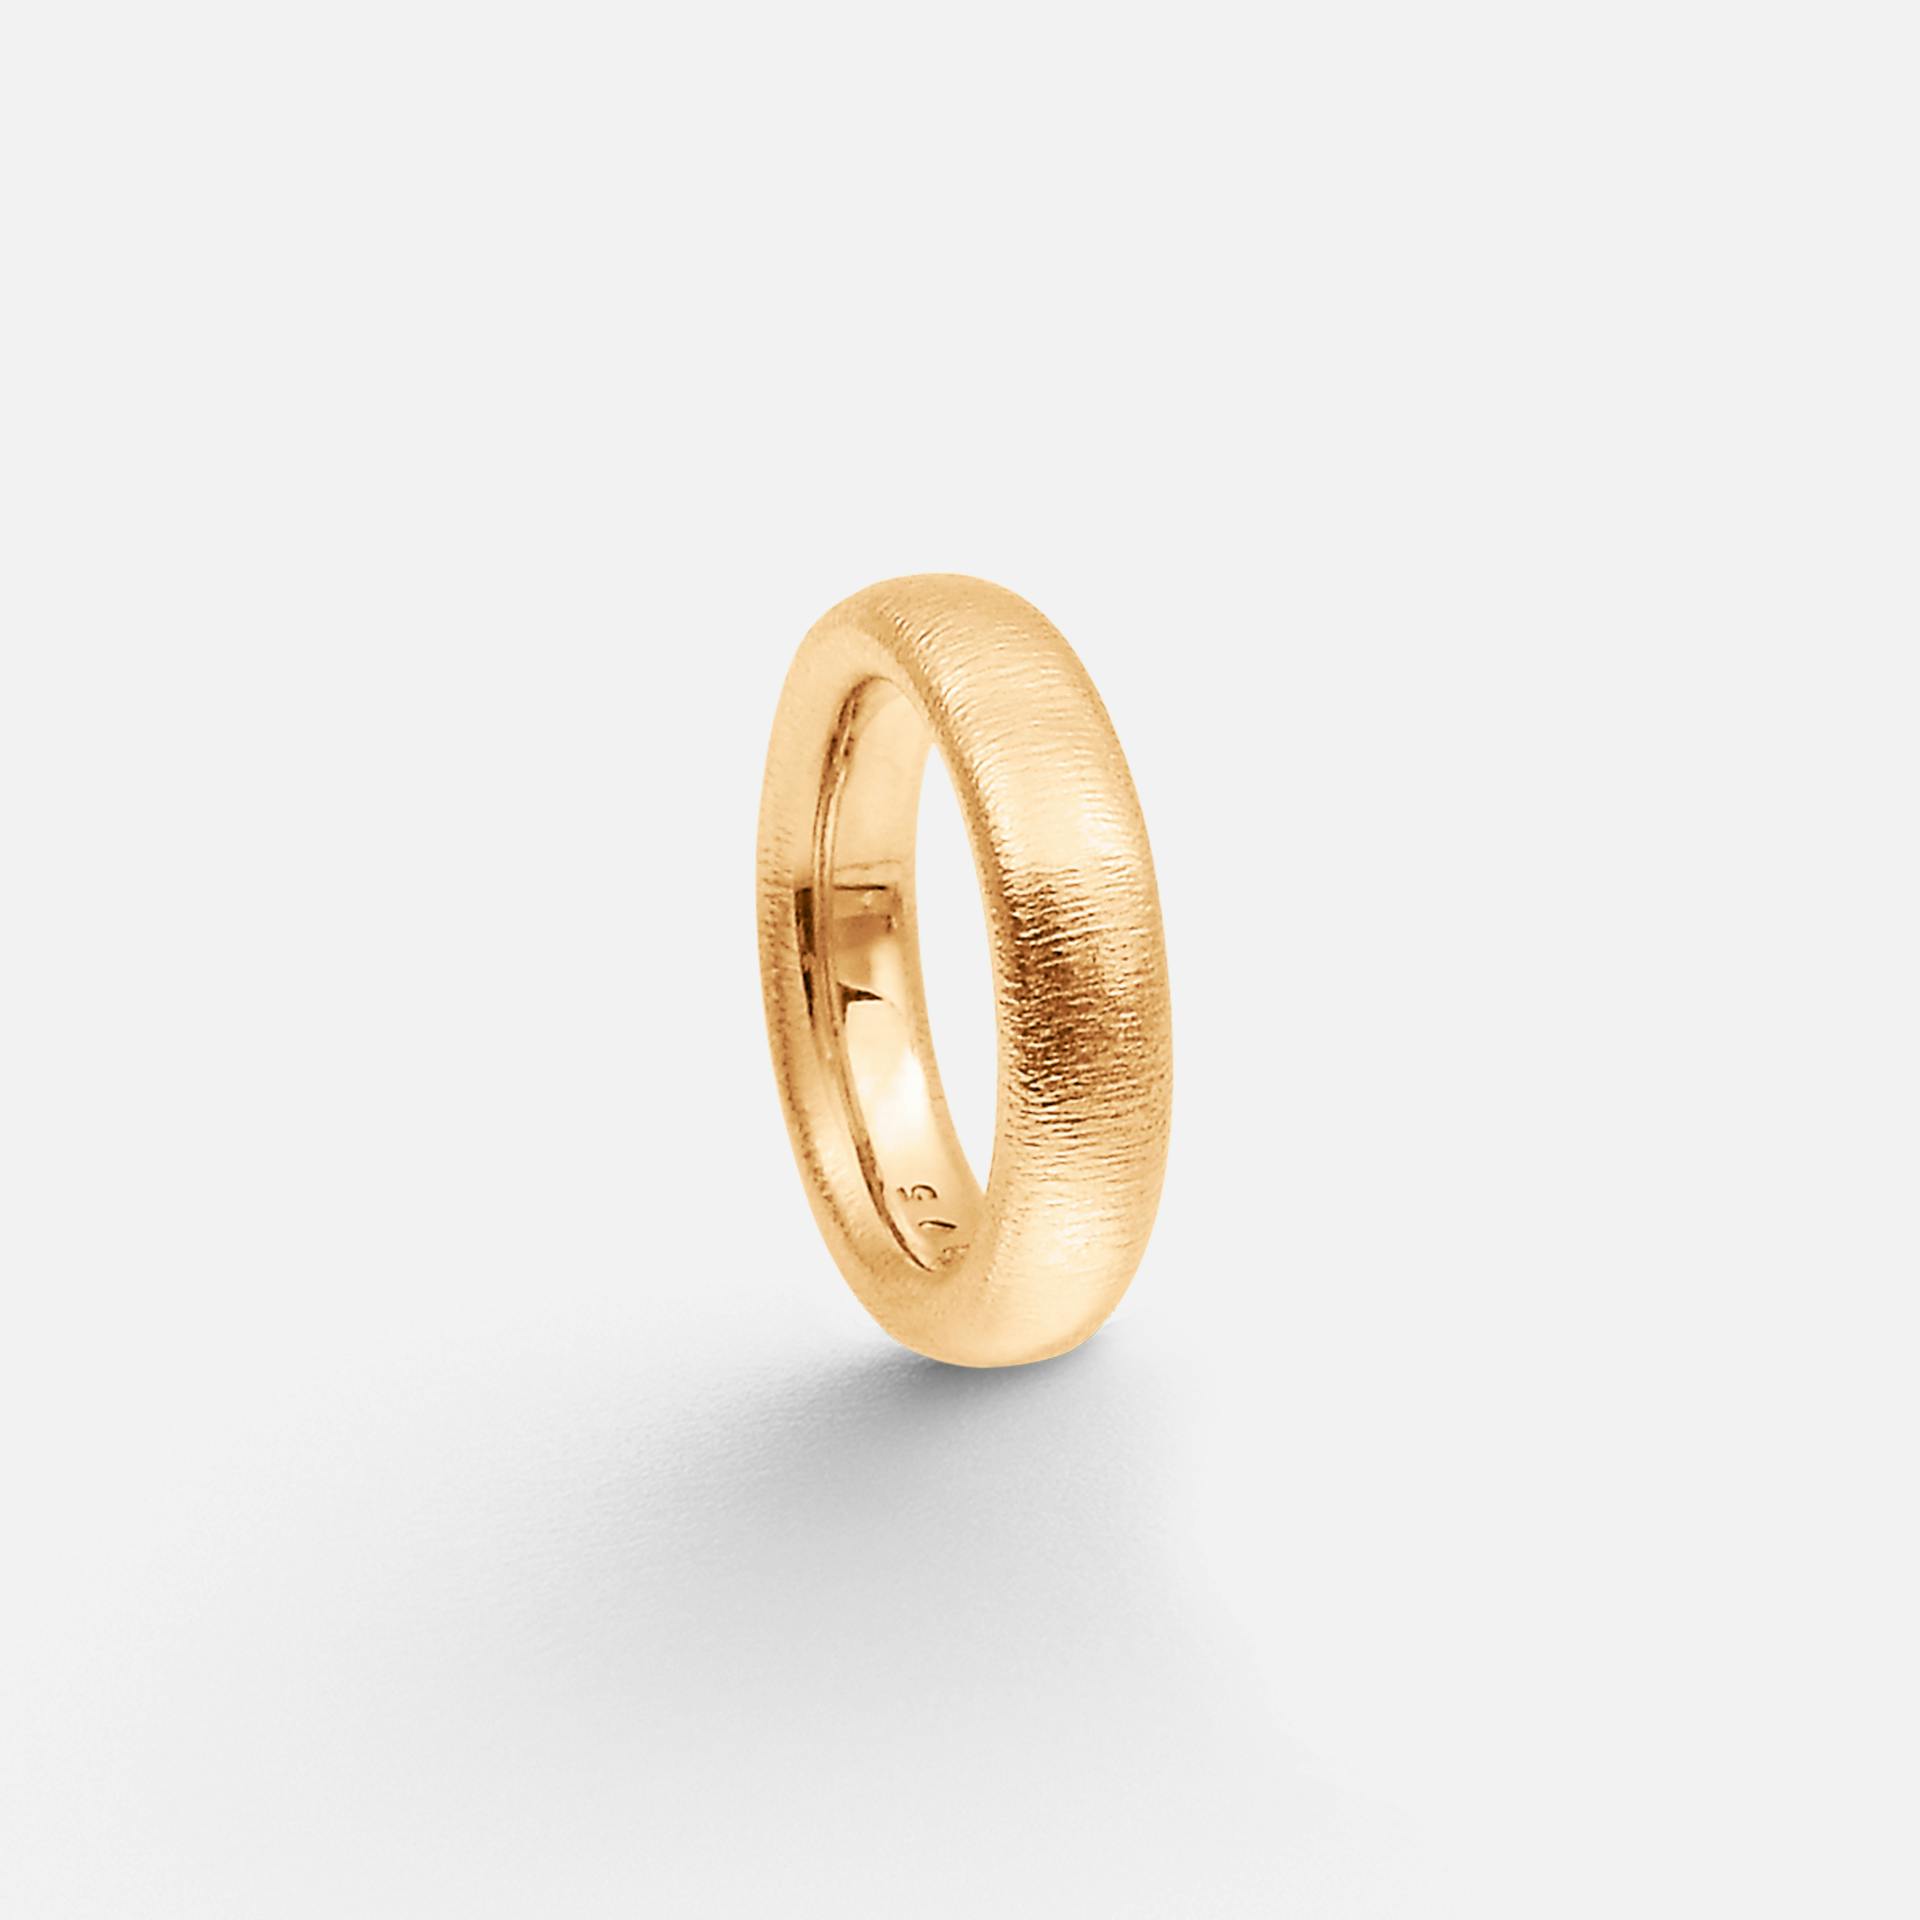 The Ring herre 5 mm 18k mat guld